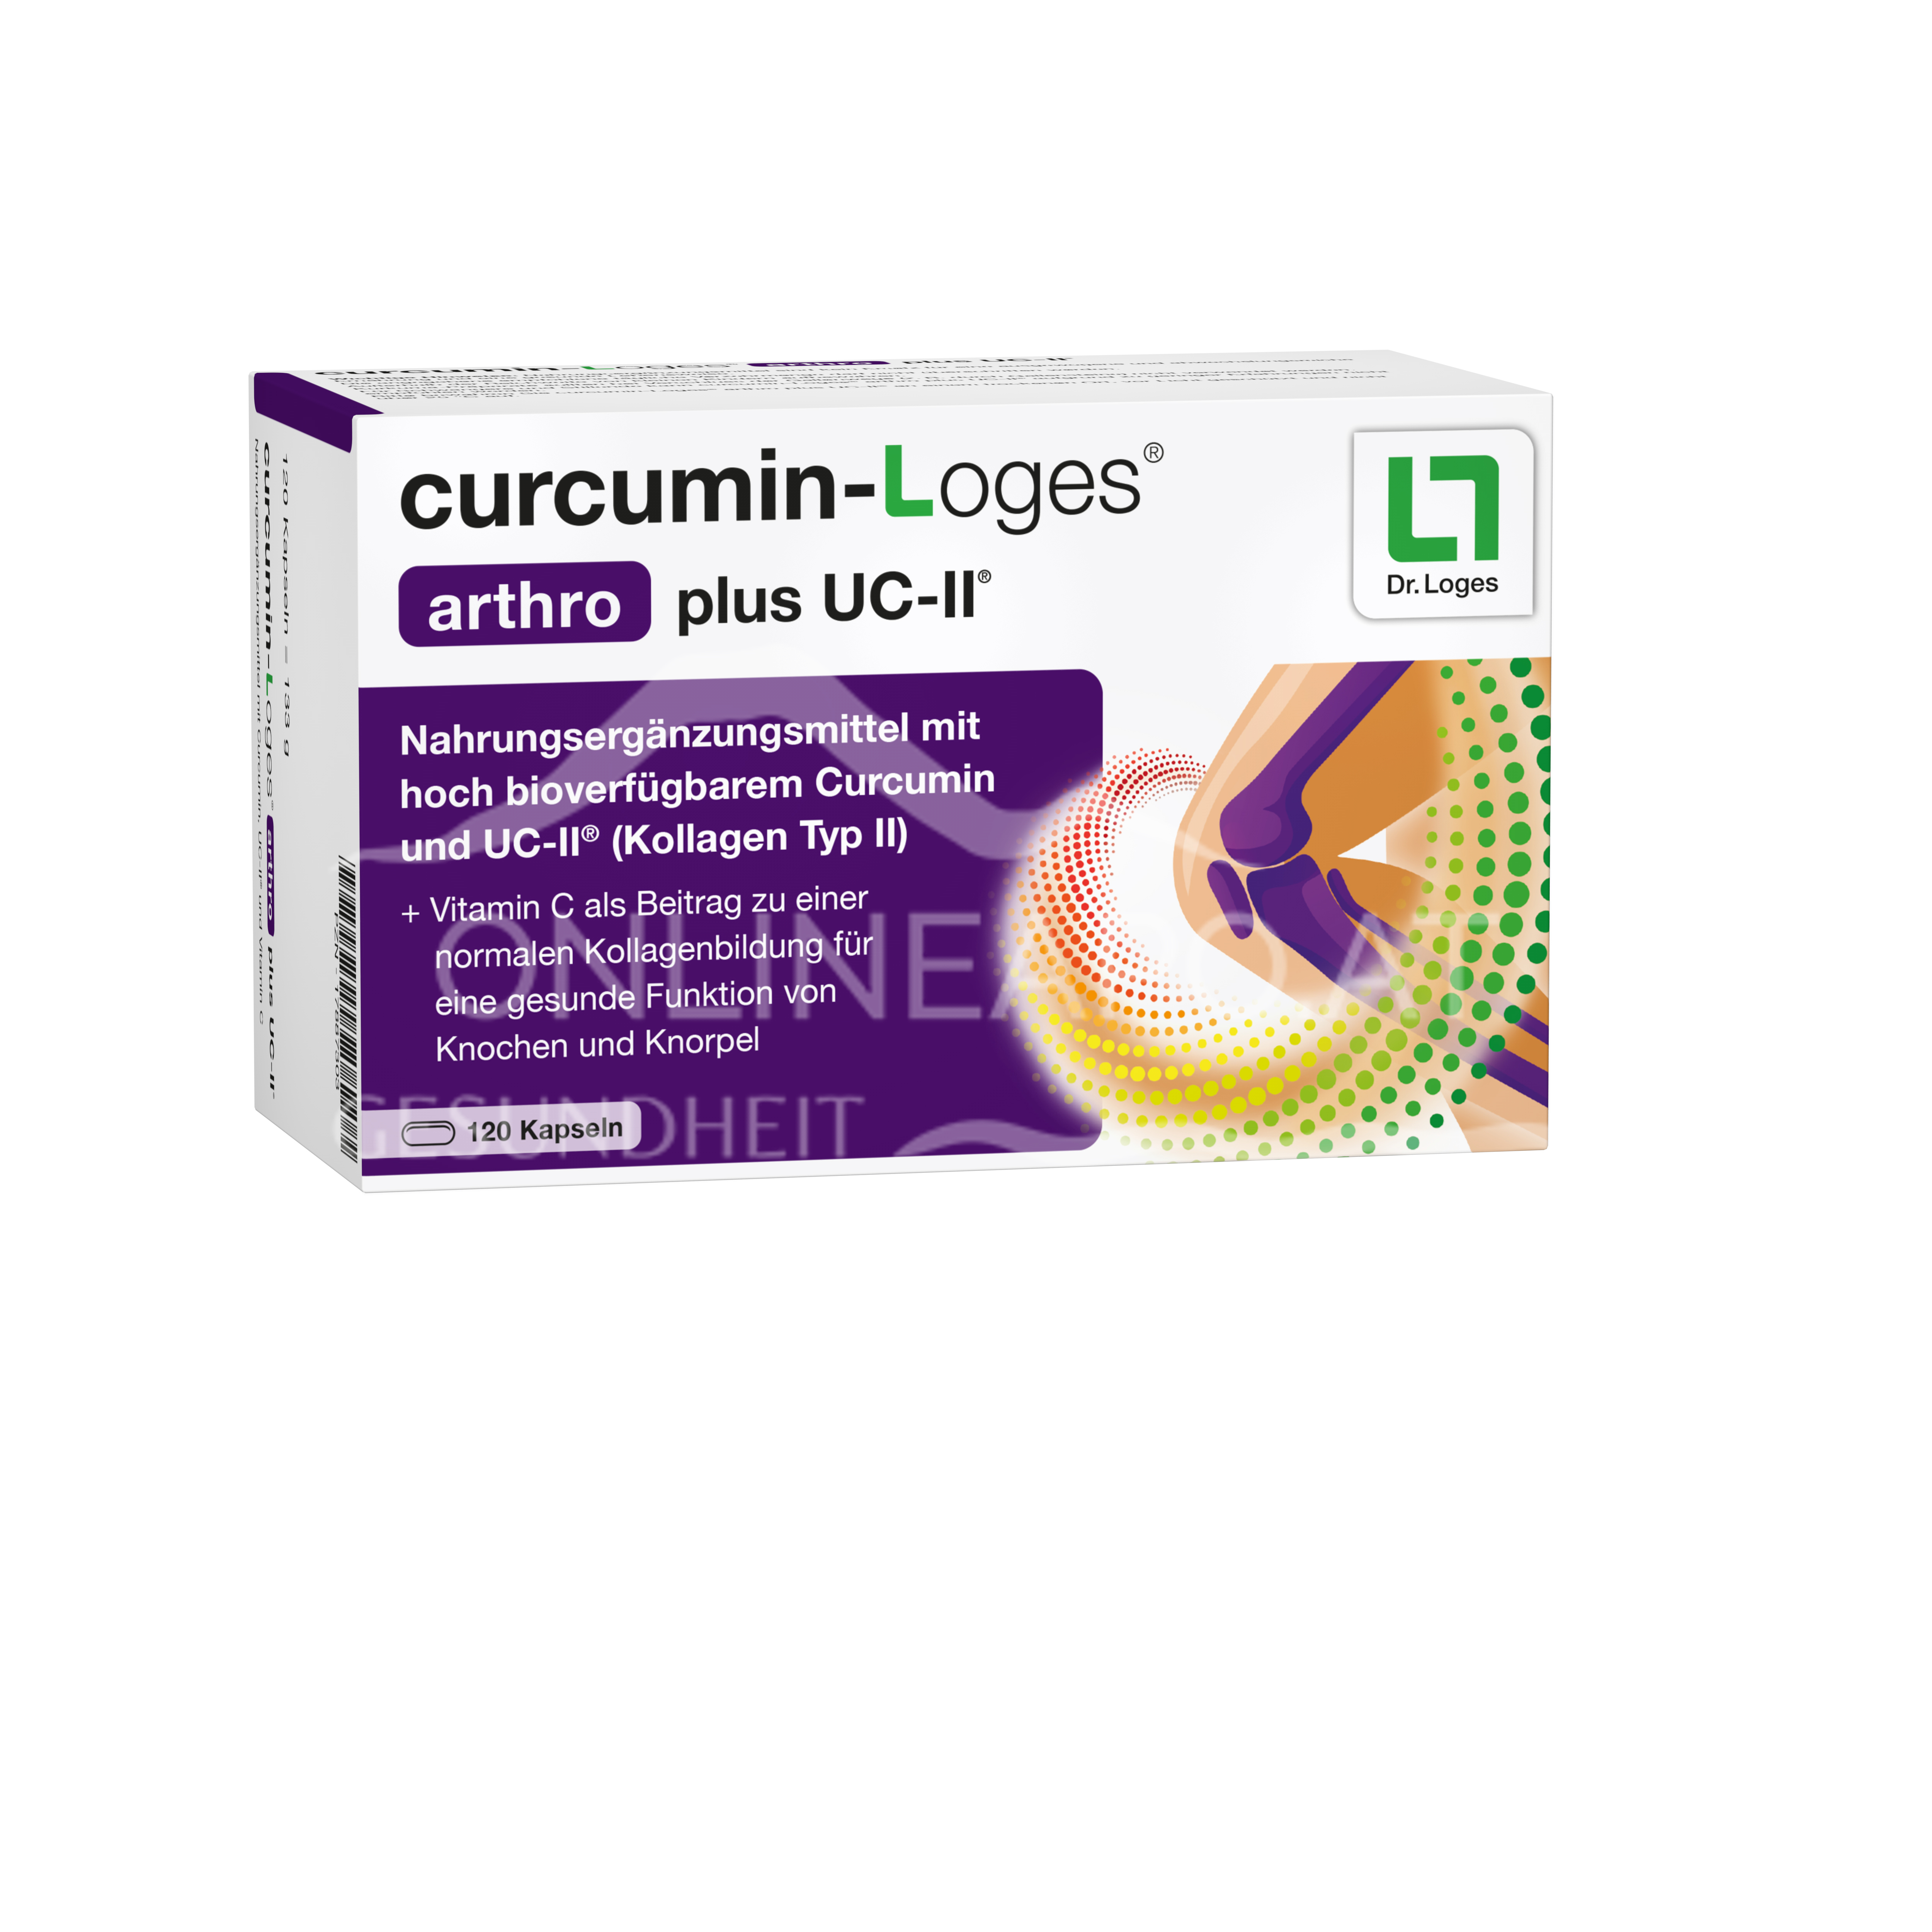 curcumin-Loges® arthro plus UC-II® Kapseln